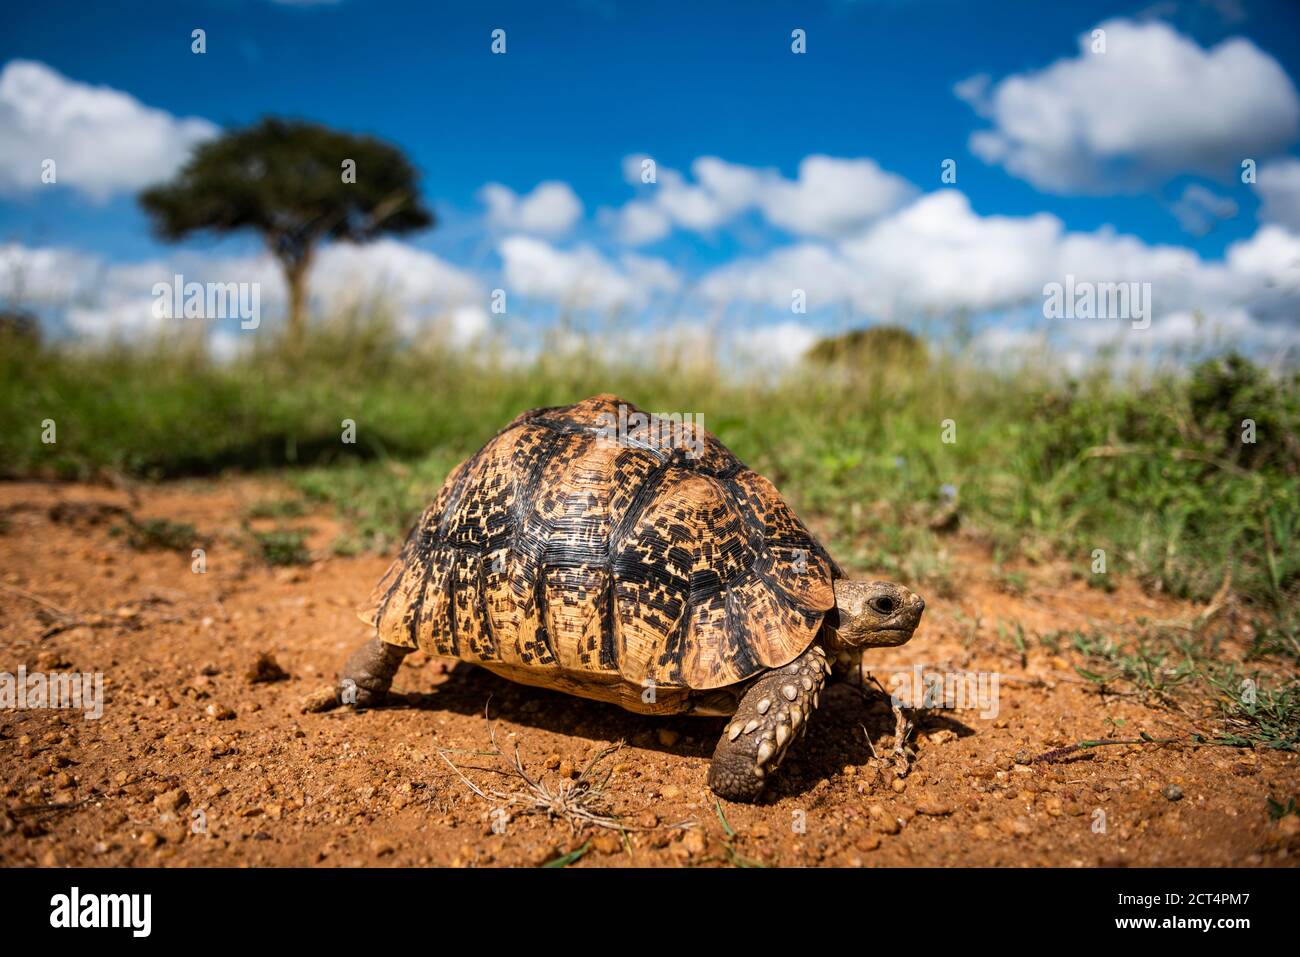 Tortoise (Stigmochelys) on african wildlife safari holiday vacation in Kenya, Africa Stock Photo